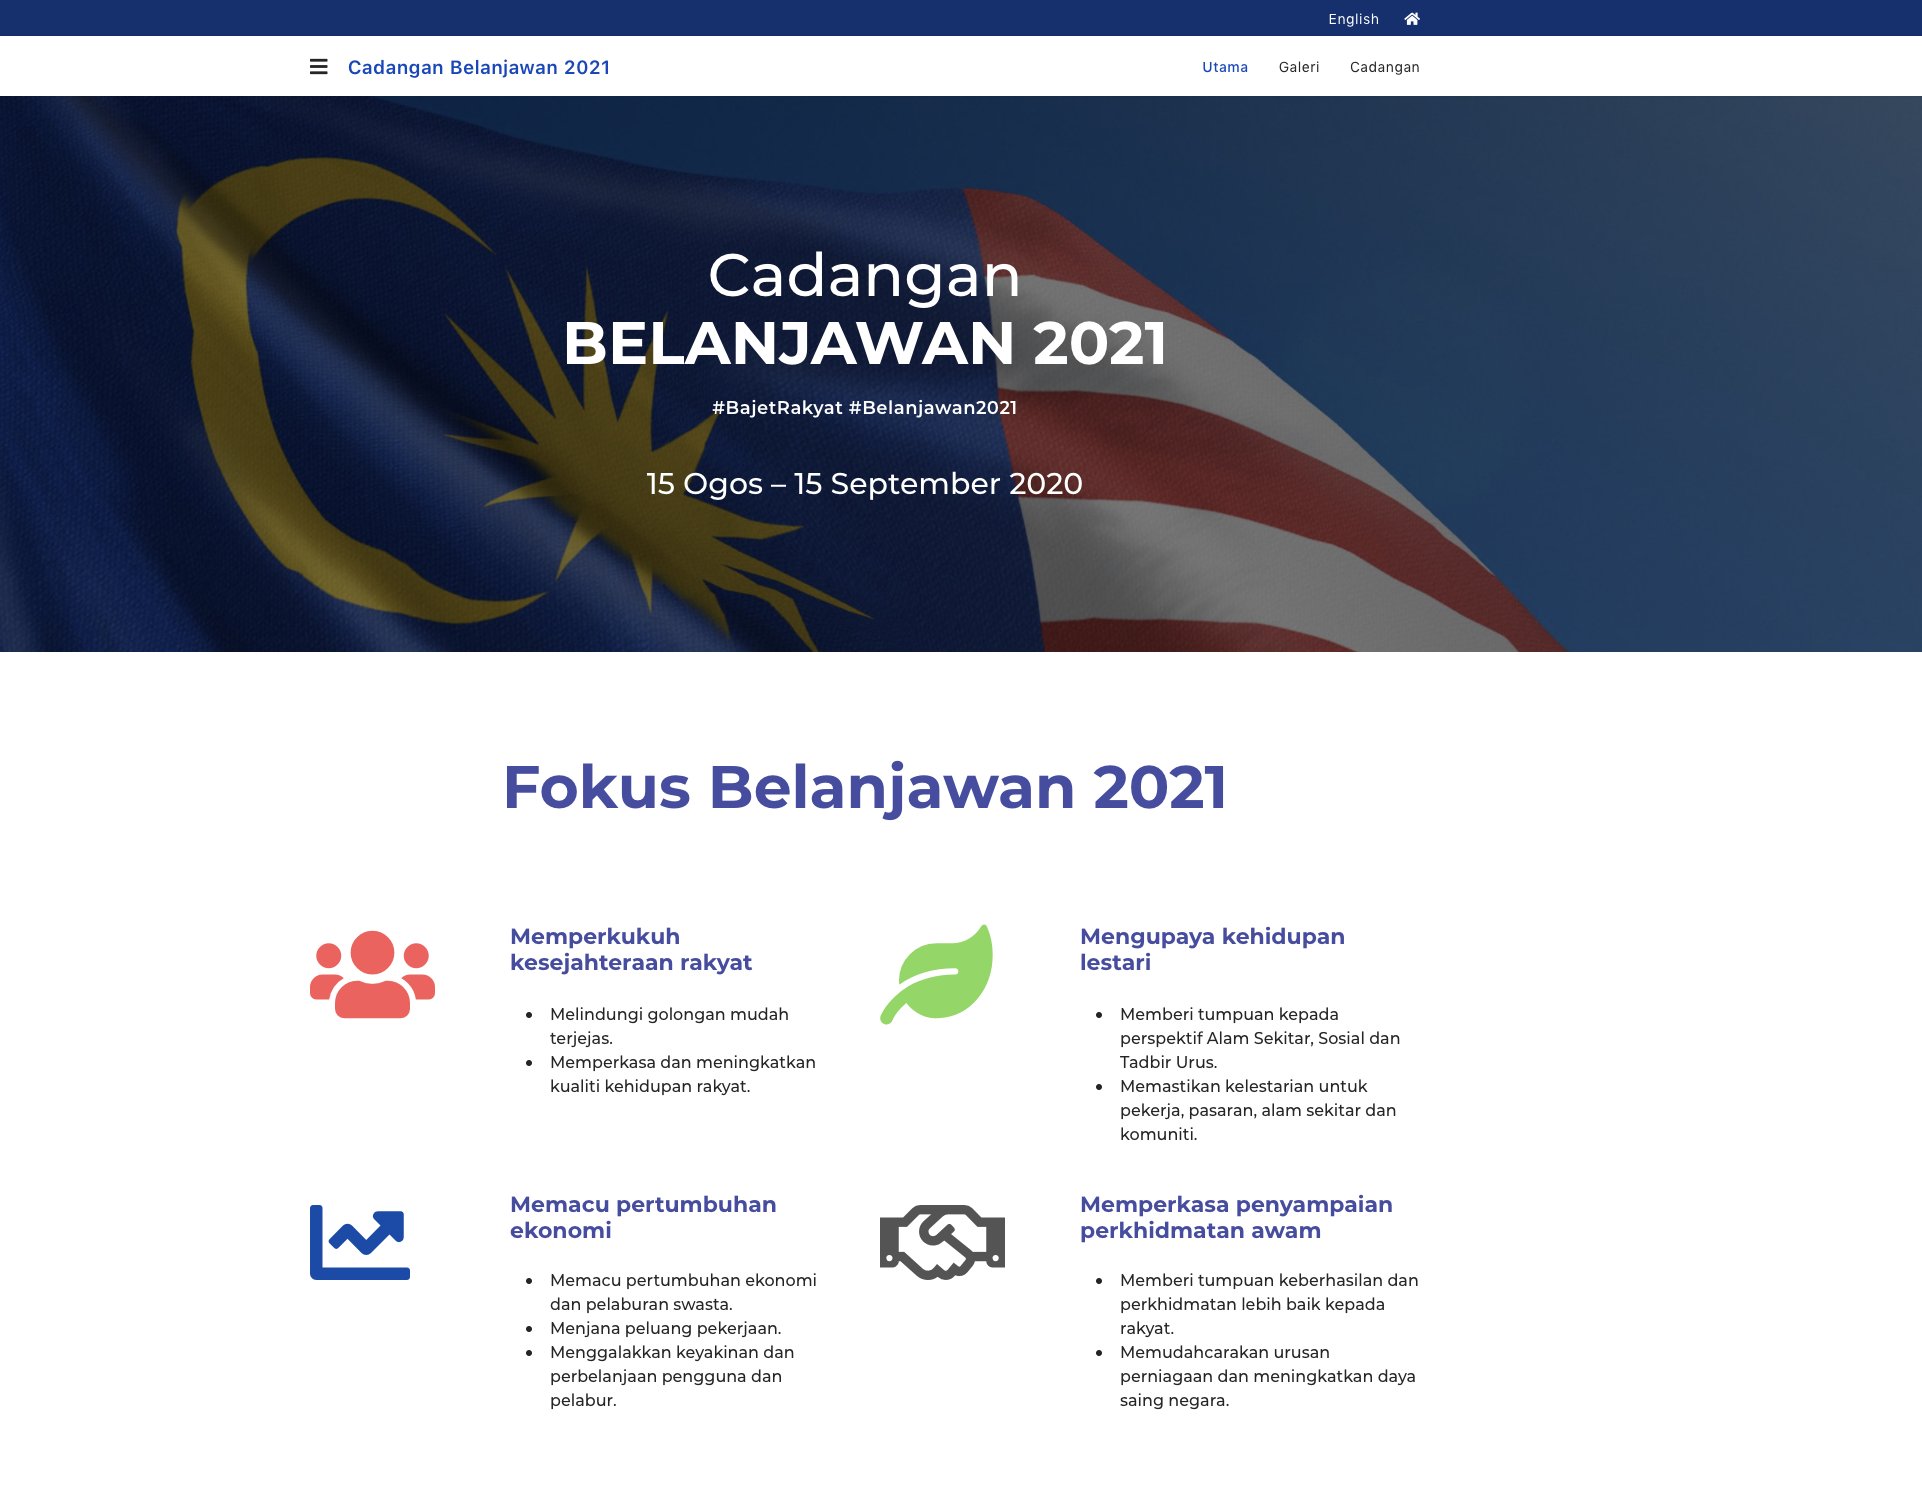 Bernama On Twitter Finance Minister Launches Portal For Budget 2021 Public Input Tzafrul Aziz Mofmalaysia Budget2021 Https T Co Iy5jjjdoso Https T Co Rslps4mkxp